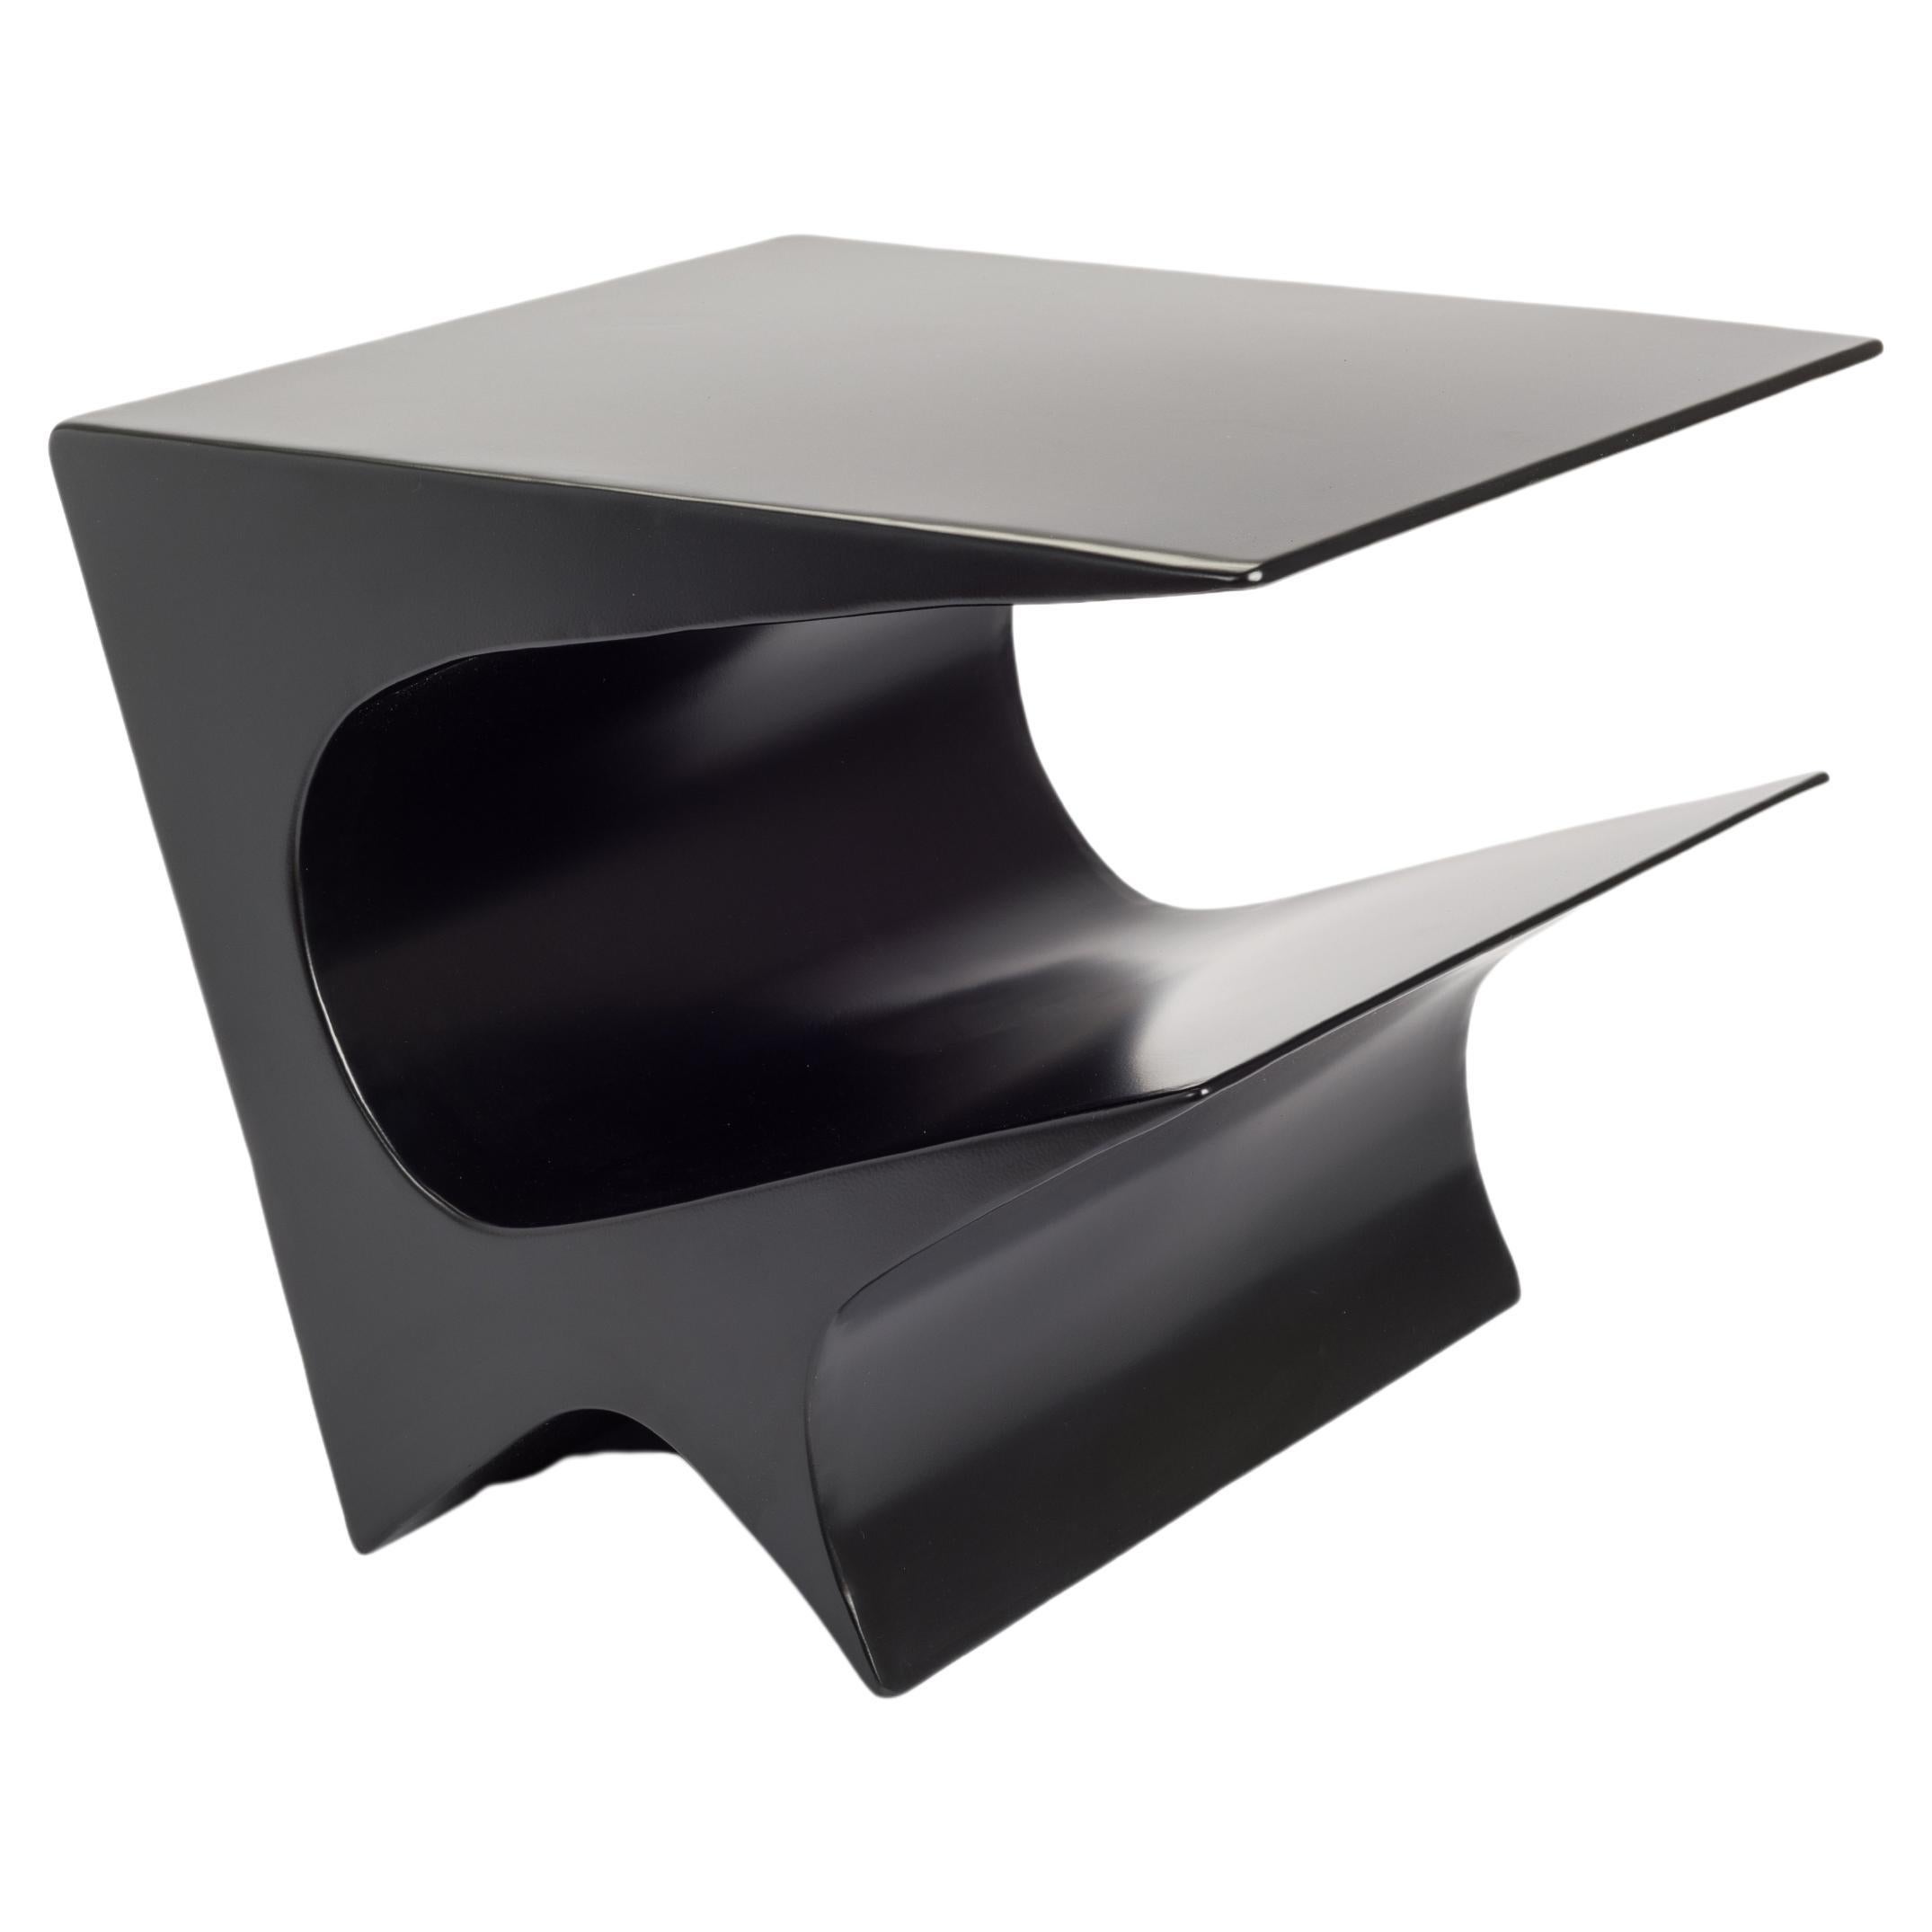 Table d'appoint Axis étoilé en aluminium noir par Neal Aronowitz